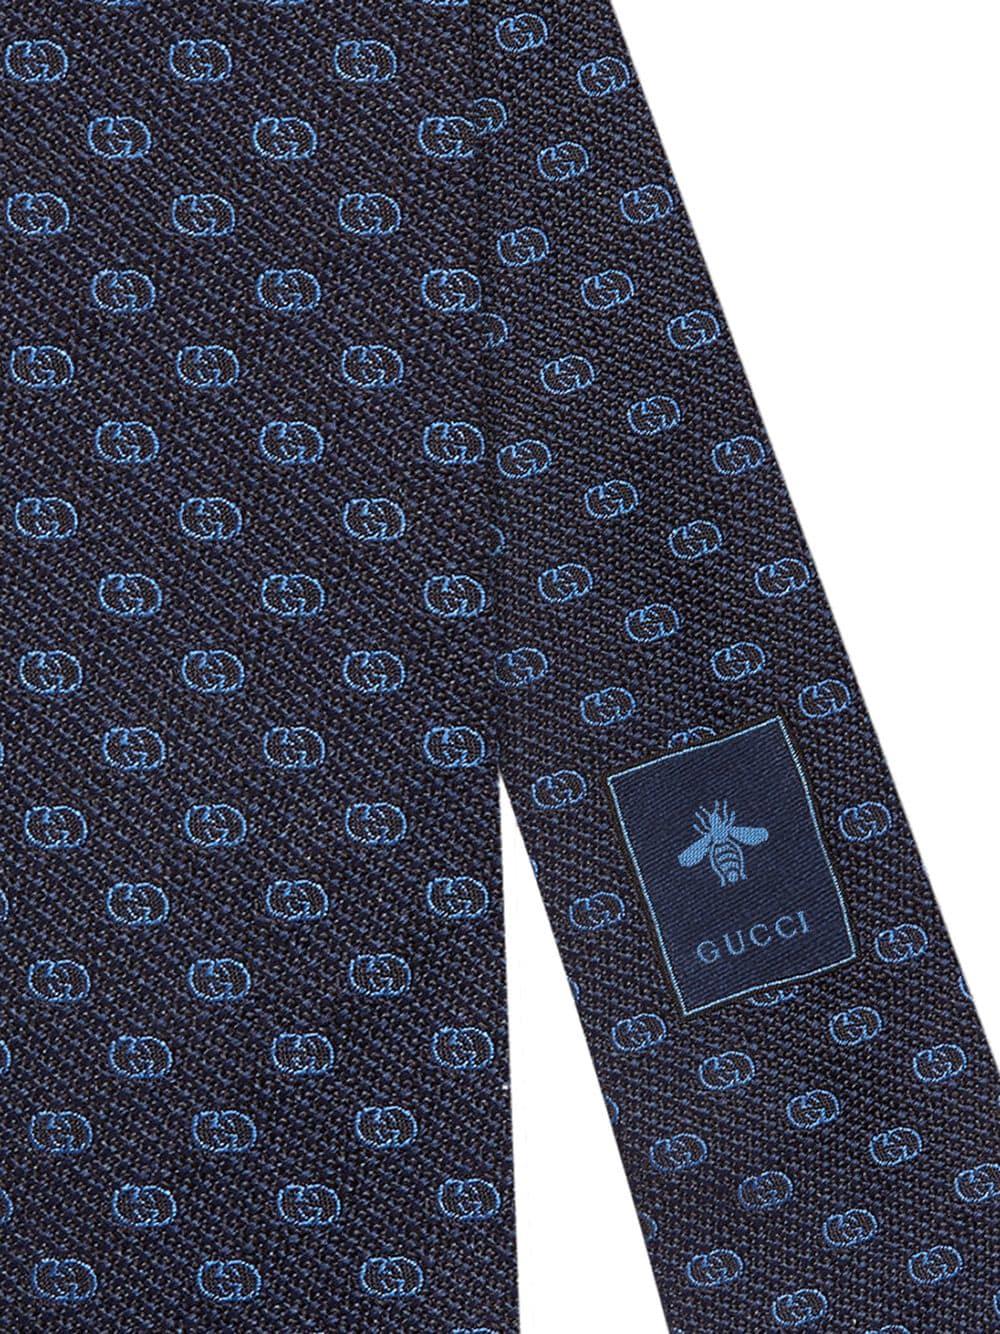 Gucci Silk GG Pattern Tie in Blue for Men - Lyst